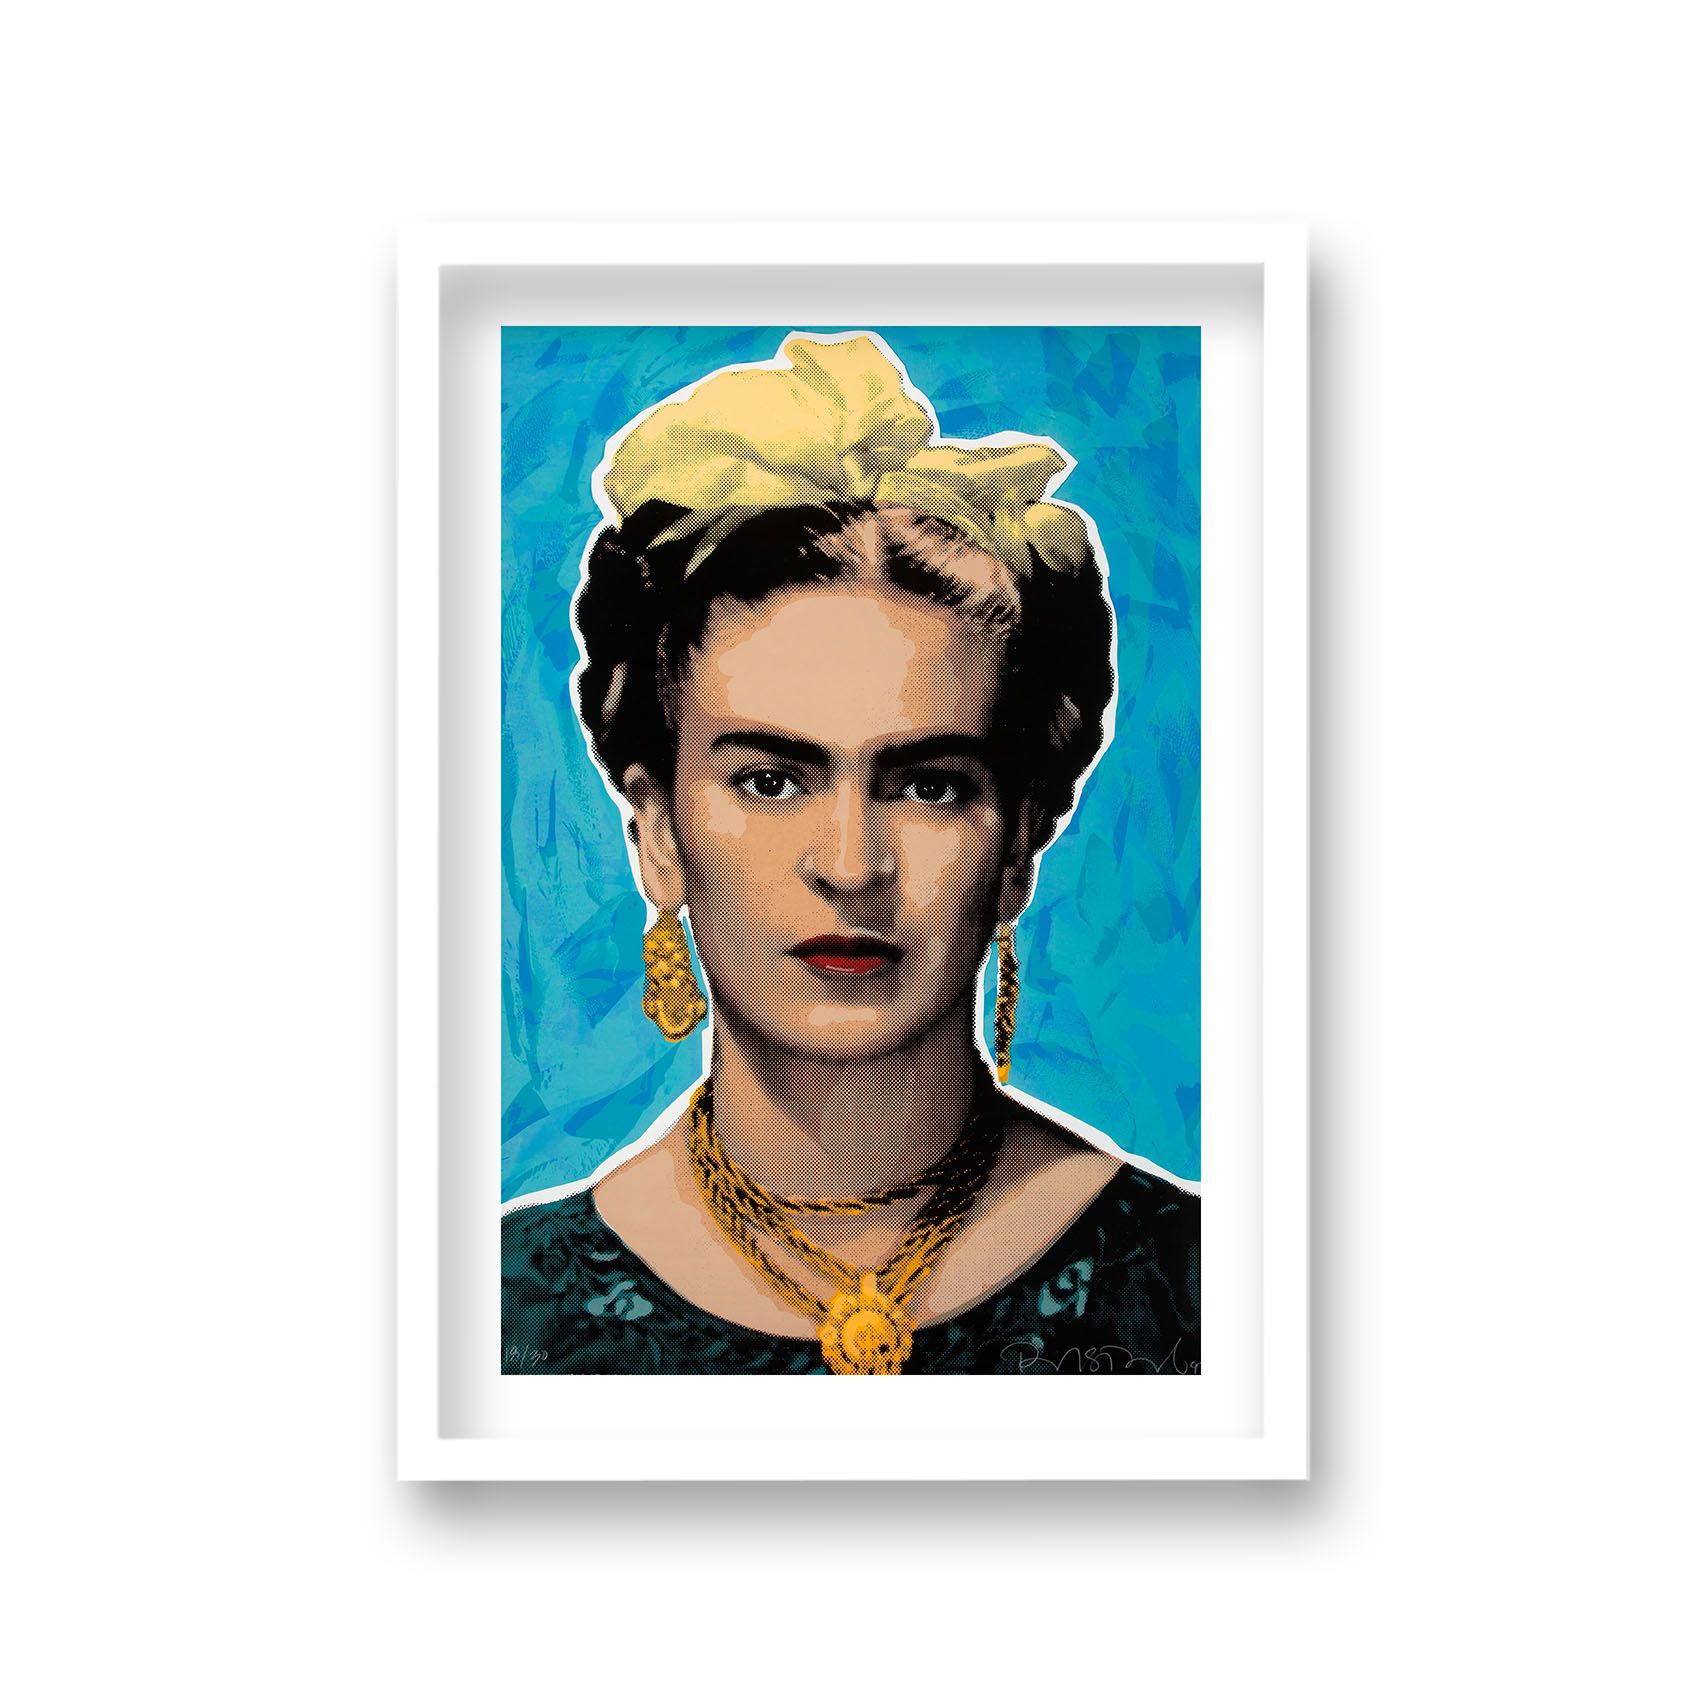 Frida Kahlo Pop Art Portrait